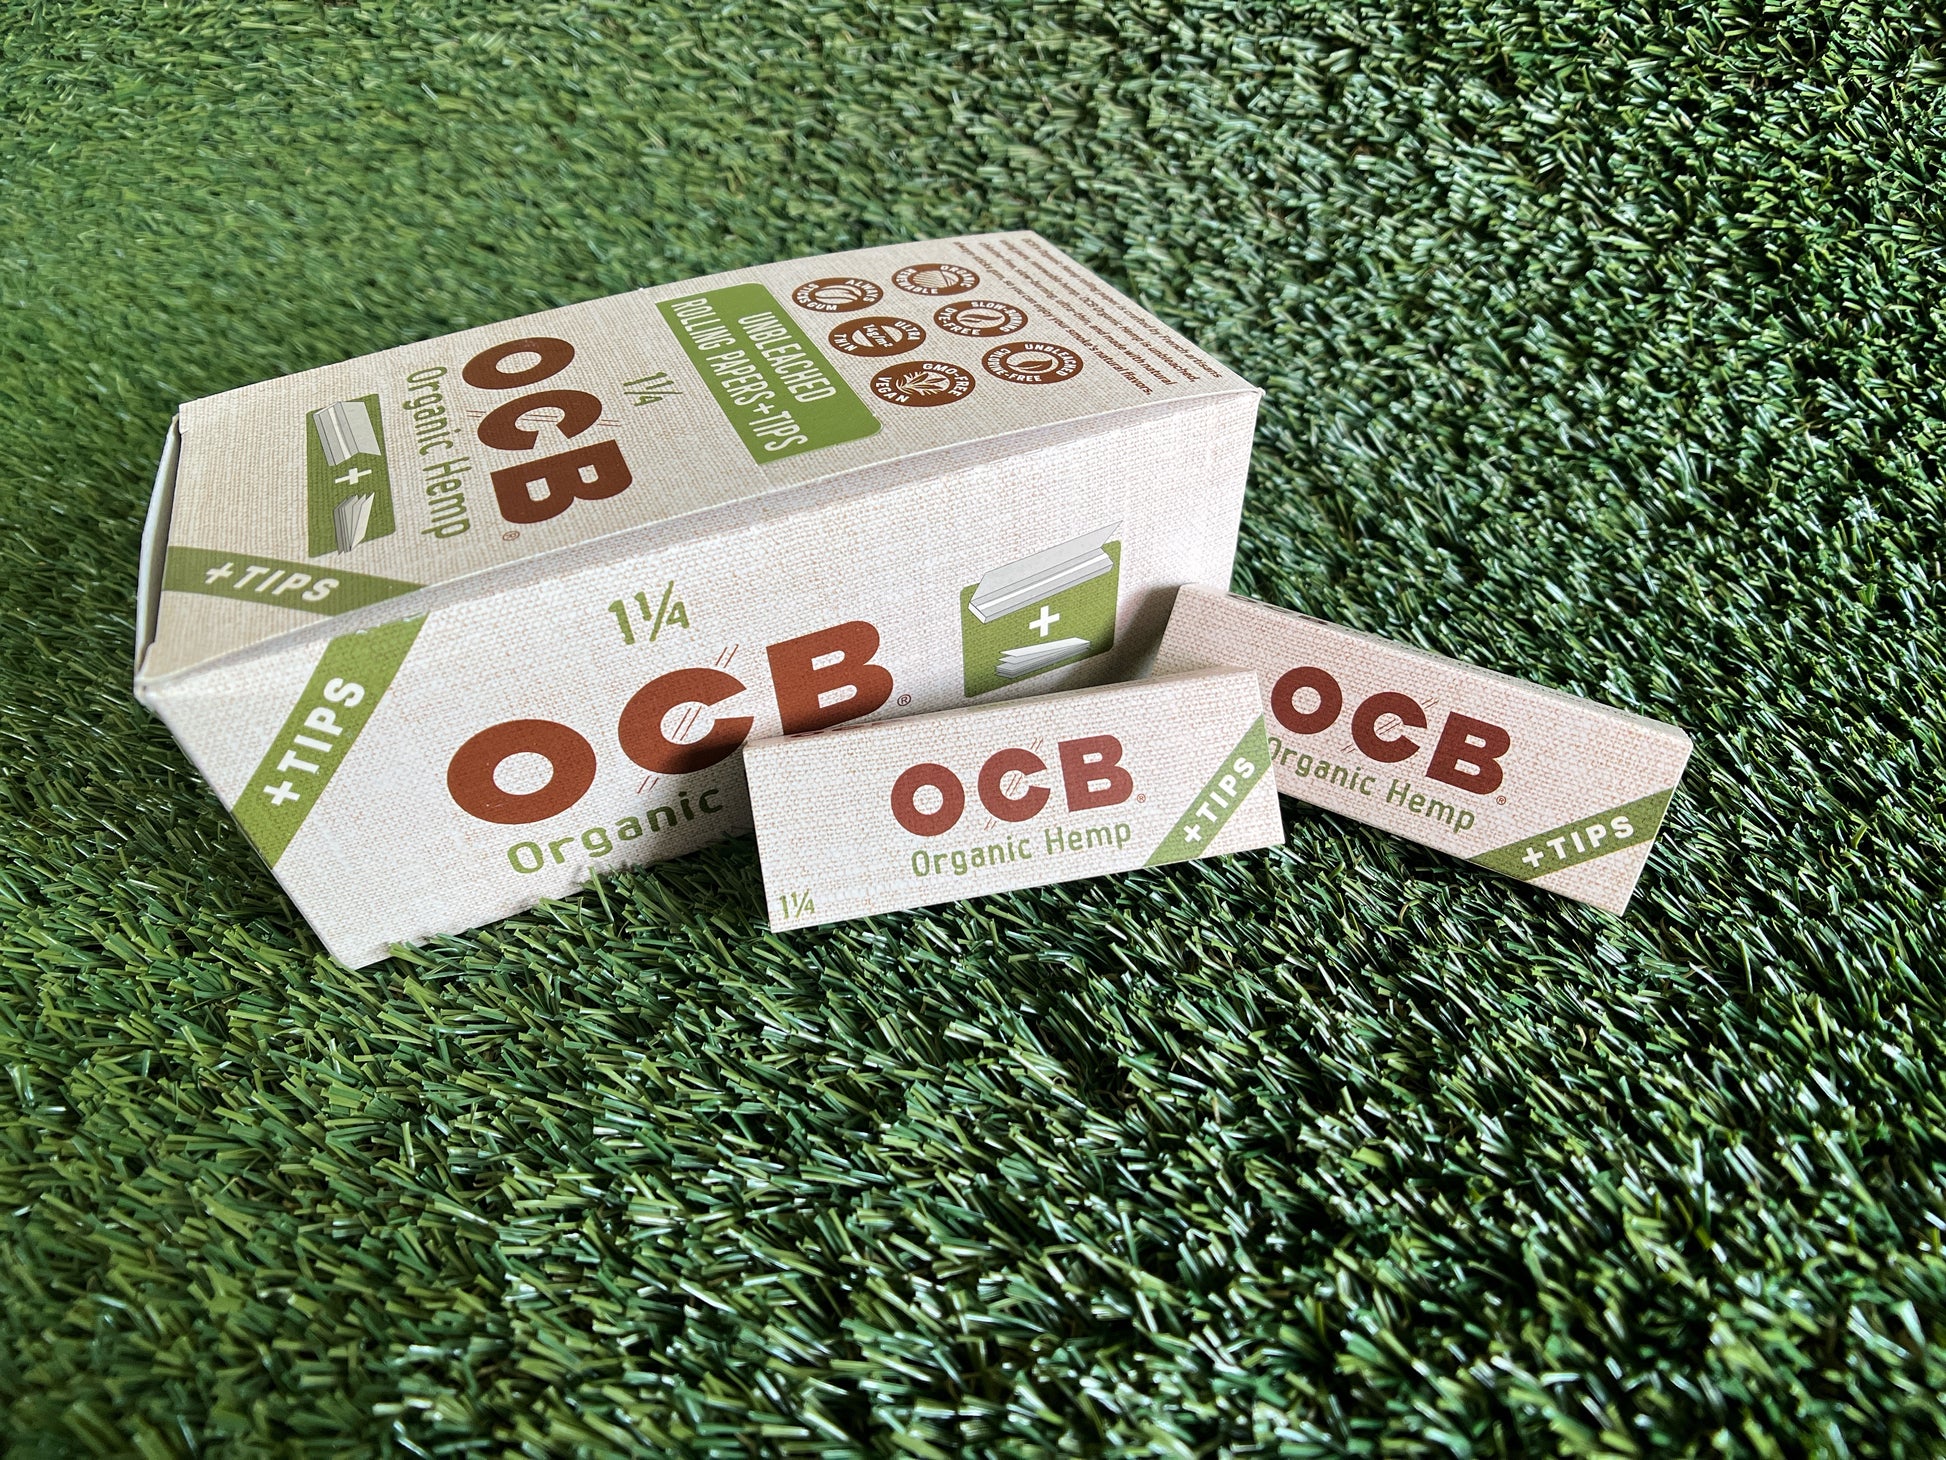 OCB Organic Hemp King Slim Rolling Papers + Tips